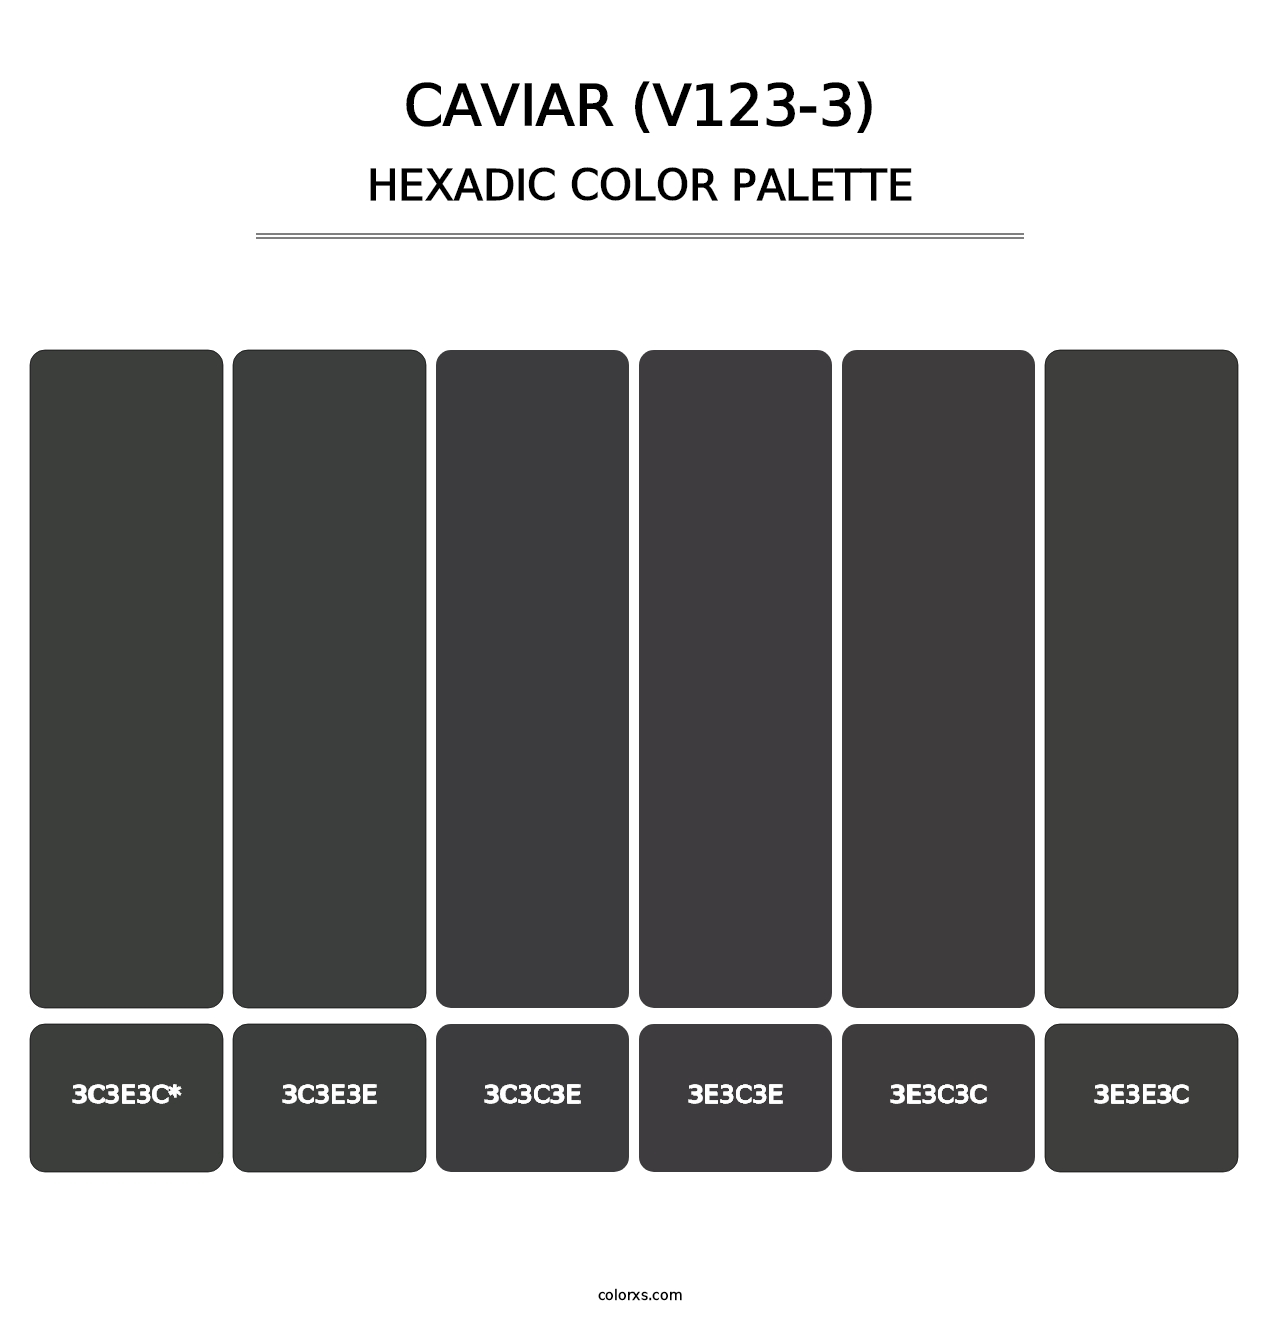 Caviar (V123-3) - Hexadic Color Palette